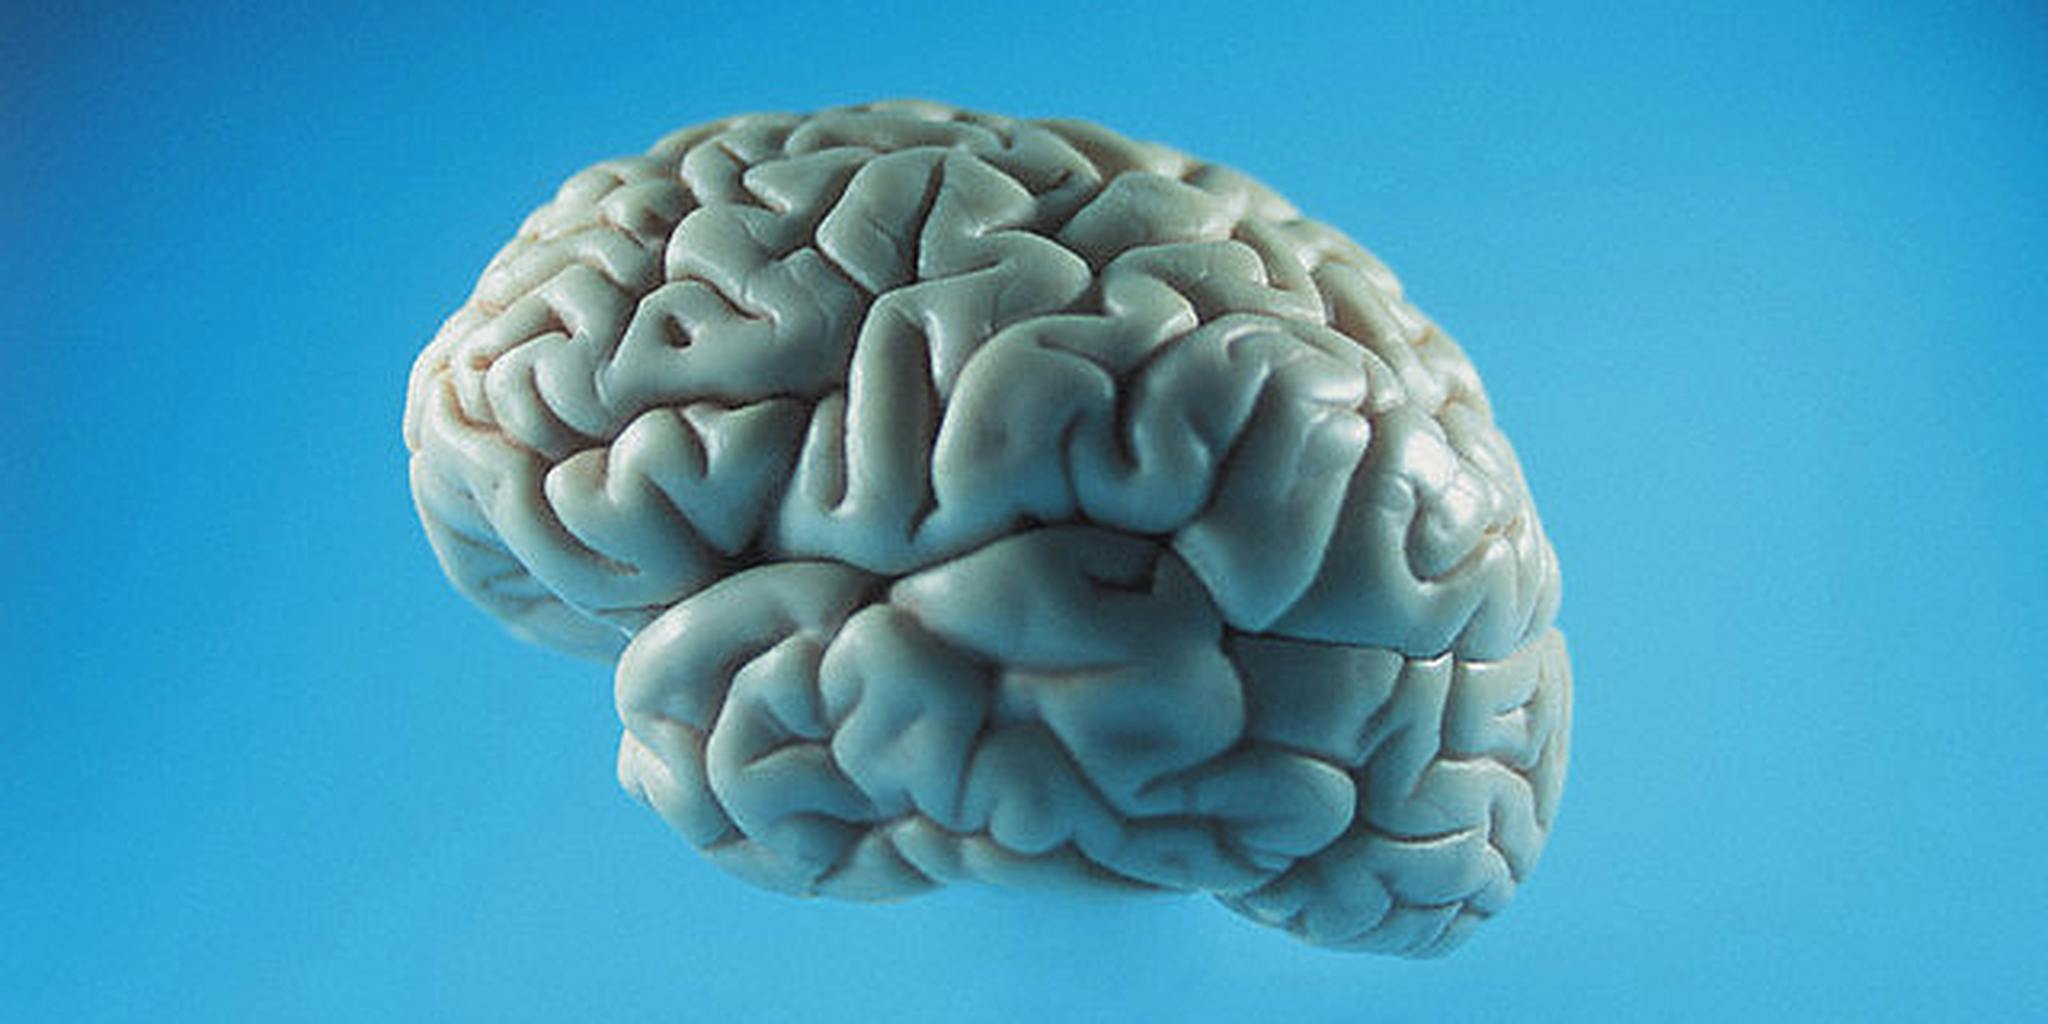 Орех похожий на мозг. Цветок похожий на мозг. Мозг похожий на губку. Облака похожие на мозг. Животное похожее на мозг в биологии.